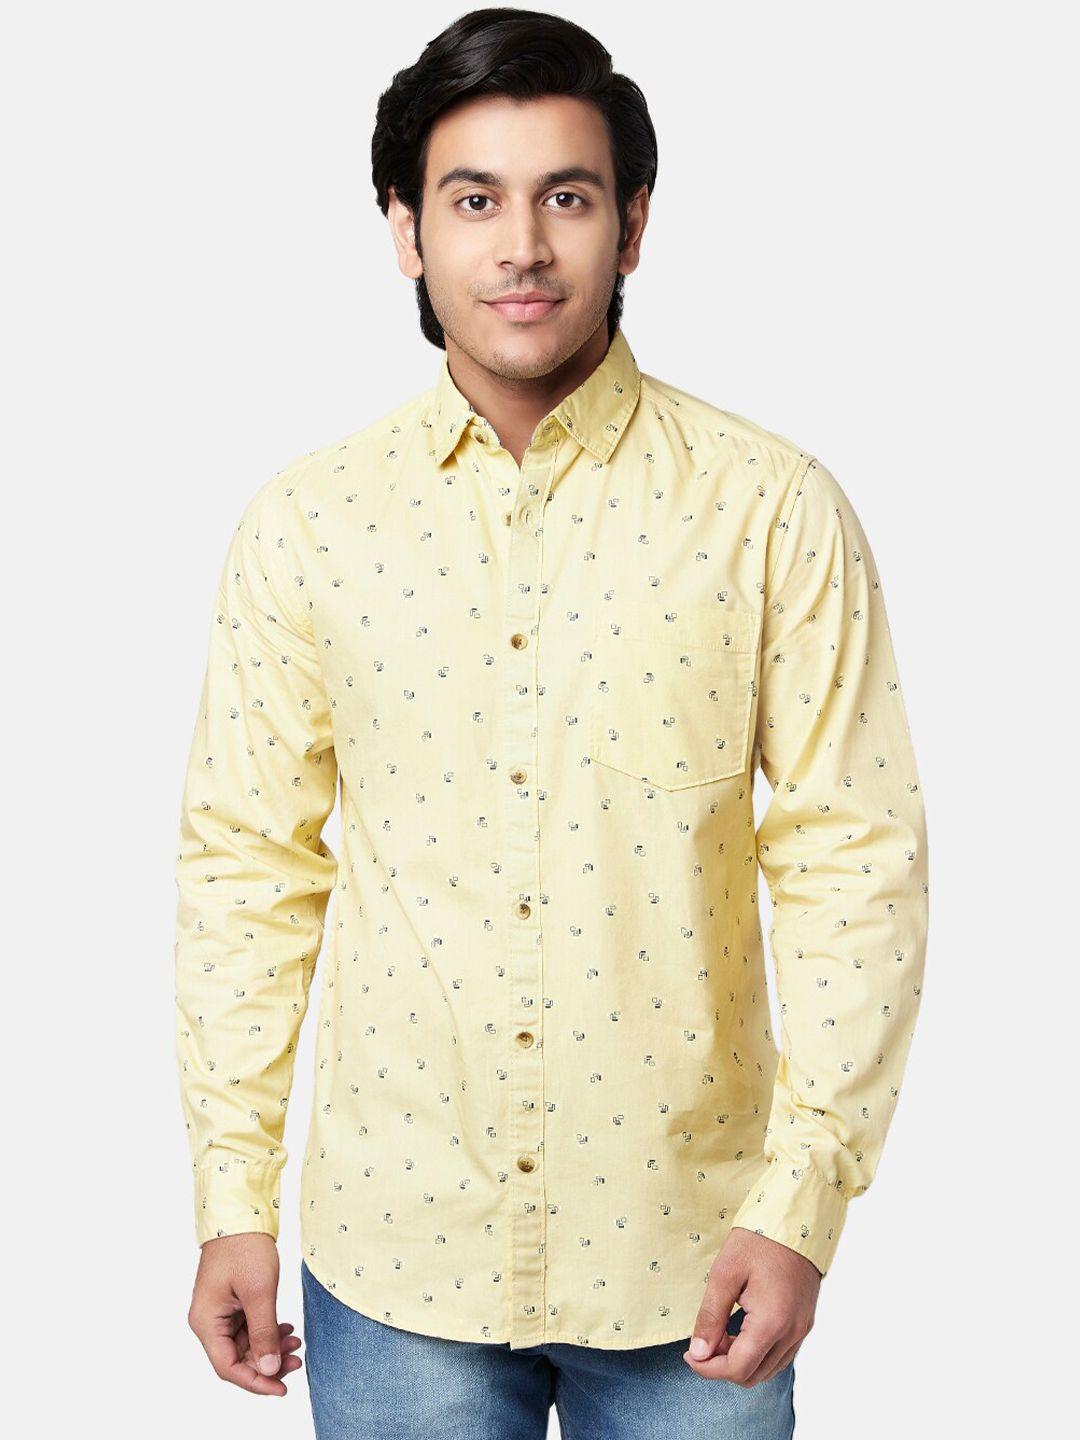 yu by pantaloons men yellow slim fit printed cotton casual shirt